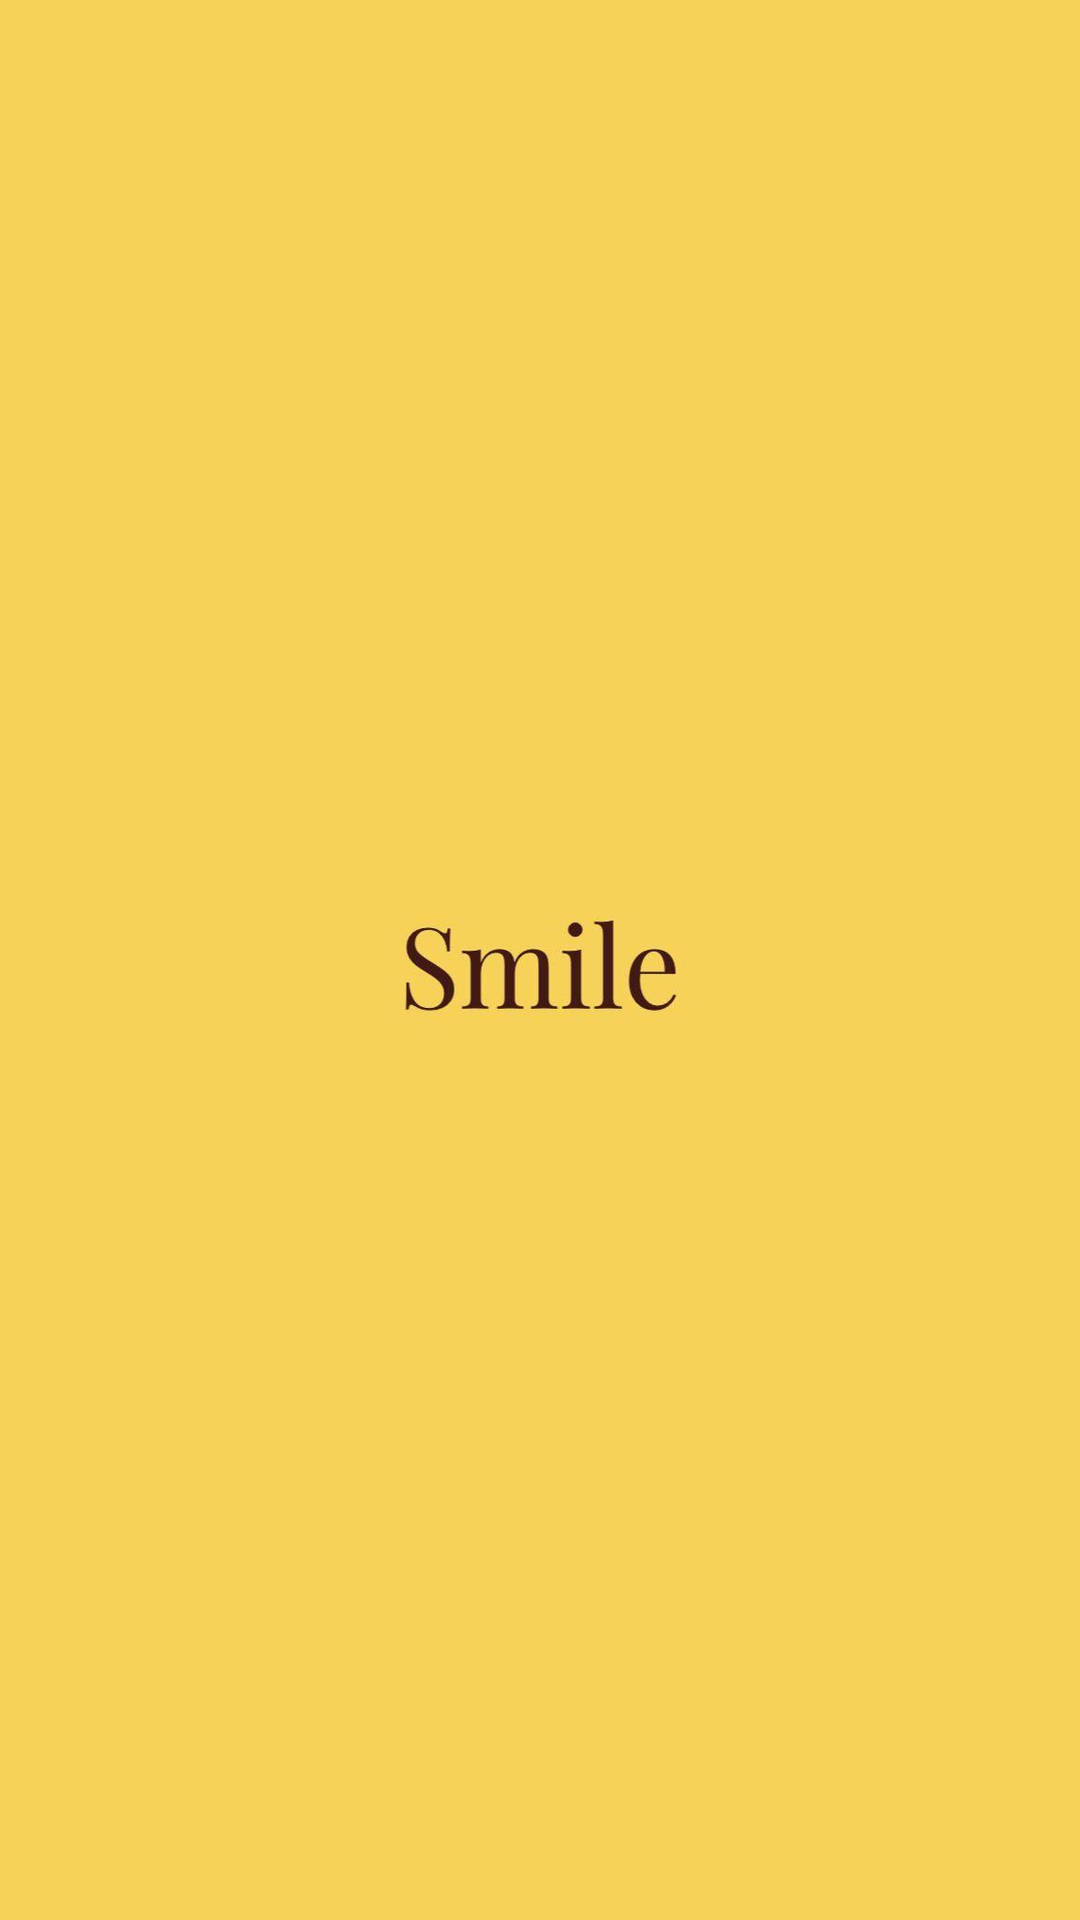 Simple Smile Plain Yellow Phone Wallpaper